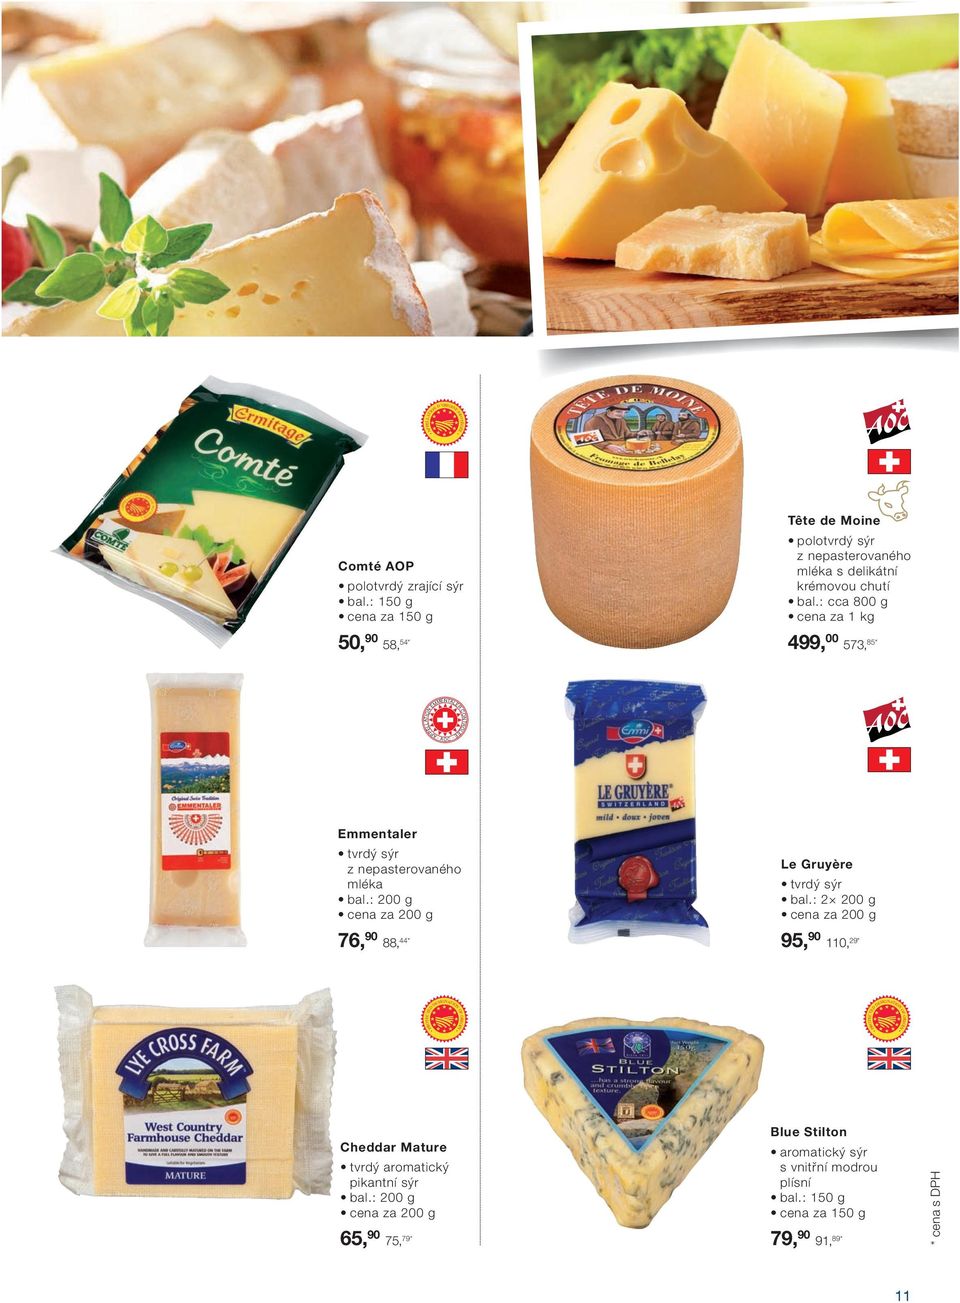 : cca 800 g cena za 1 kg 499, 00 573, 85 * - A O C - Emmentaler tvrdý sýr z nepasterovaného mléka bal.: 200 g cena za 200 g 76, 90 88, 44 * Le Gruyère tvrdý sýr bal.